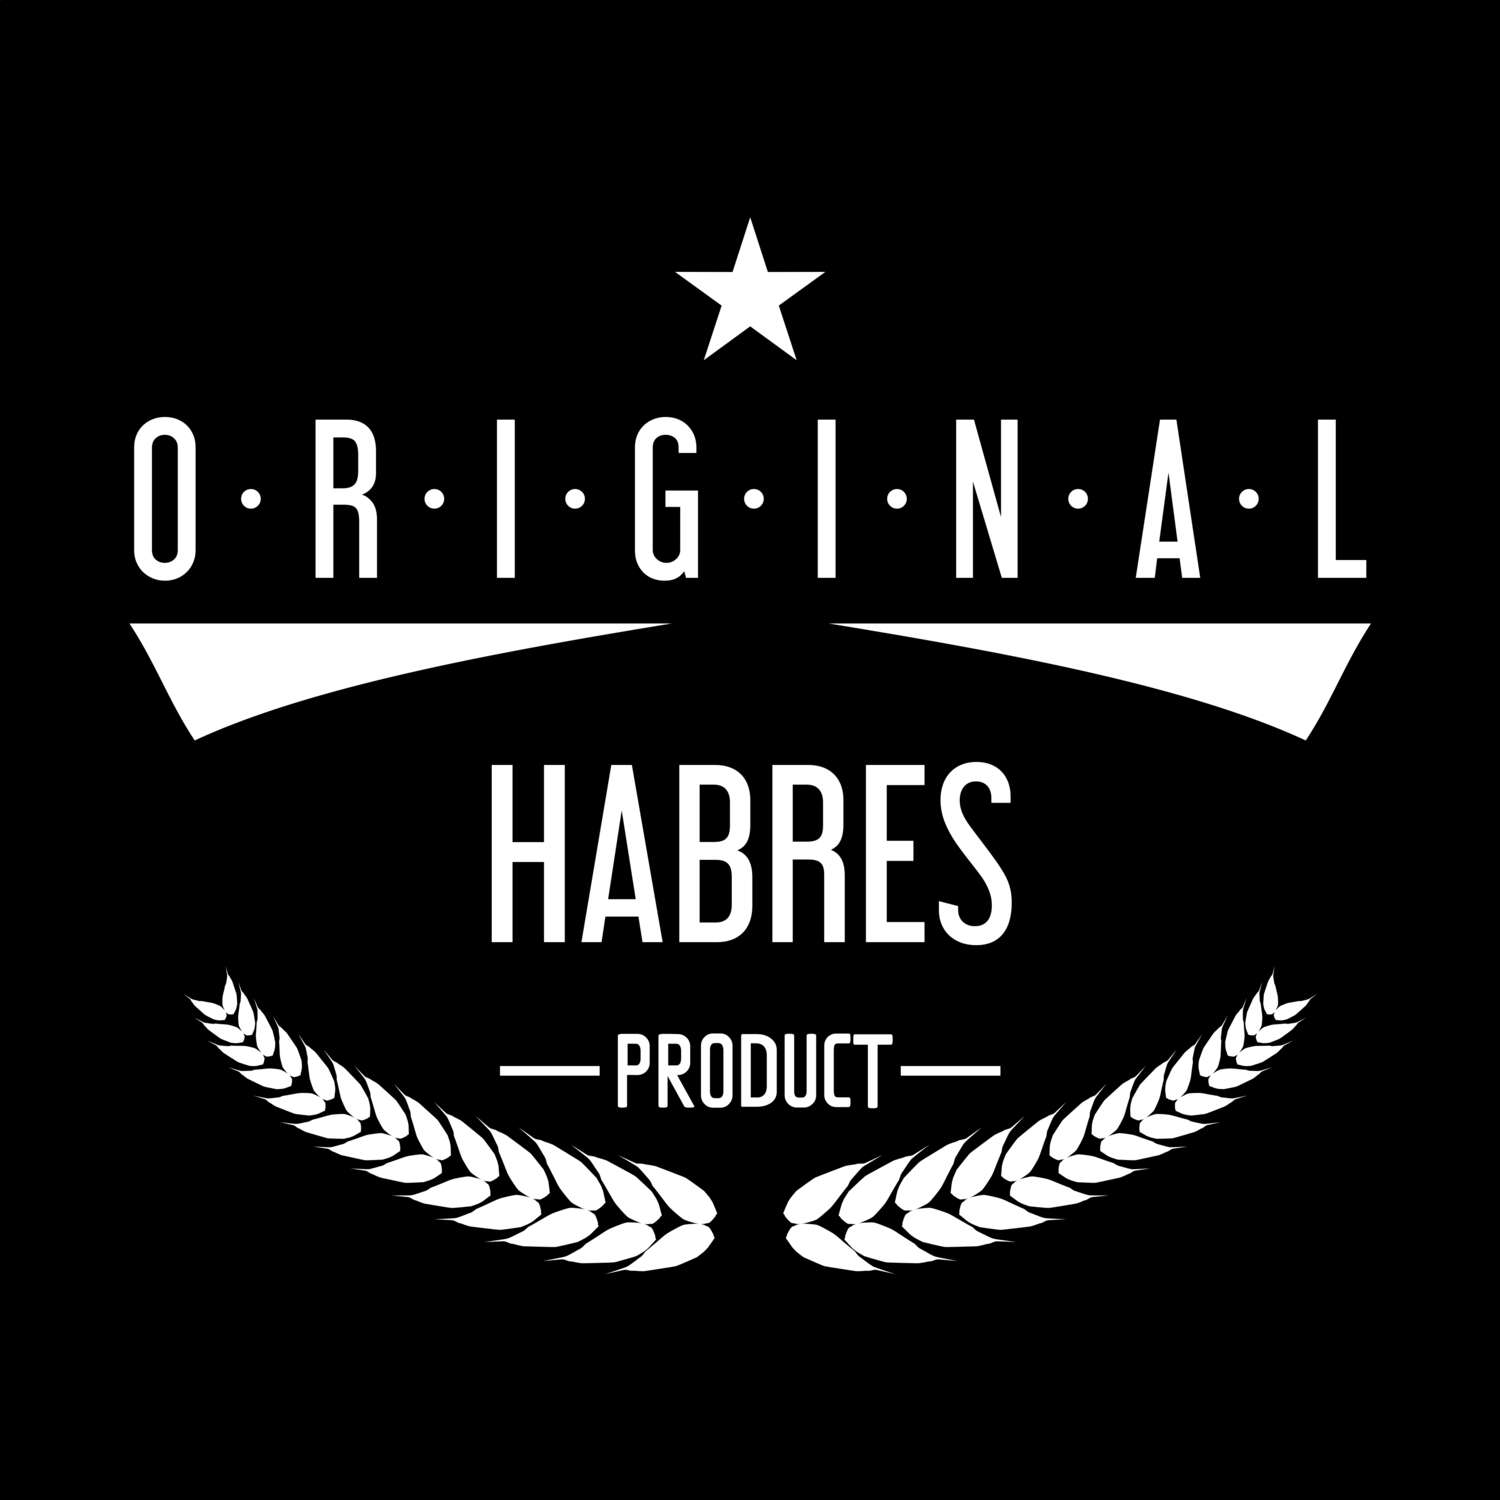 Habres T-Shirt »Original Product«